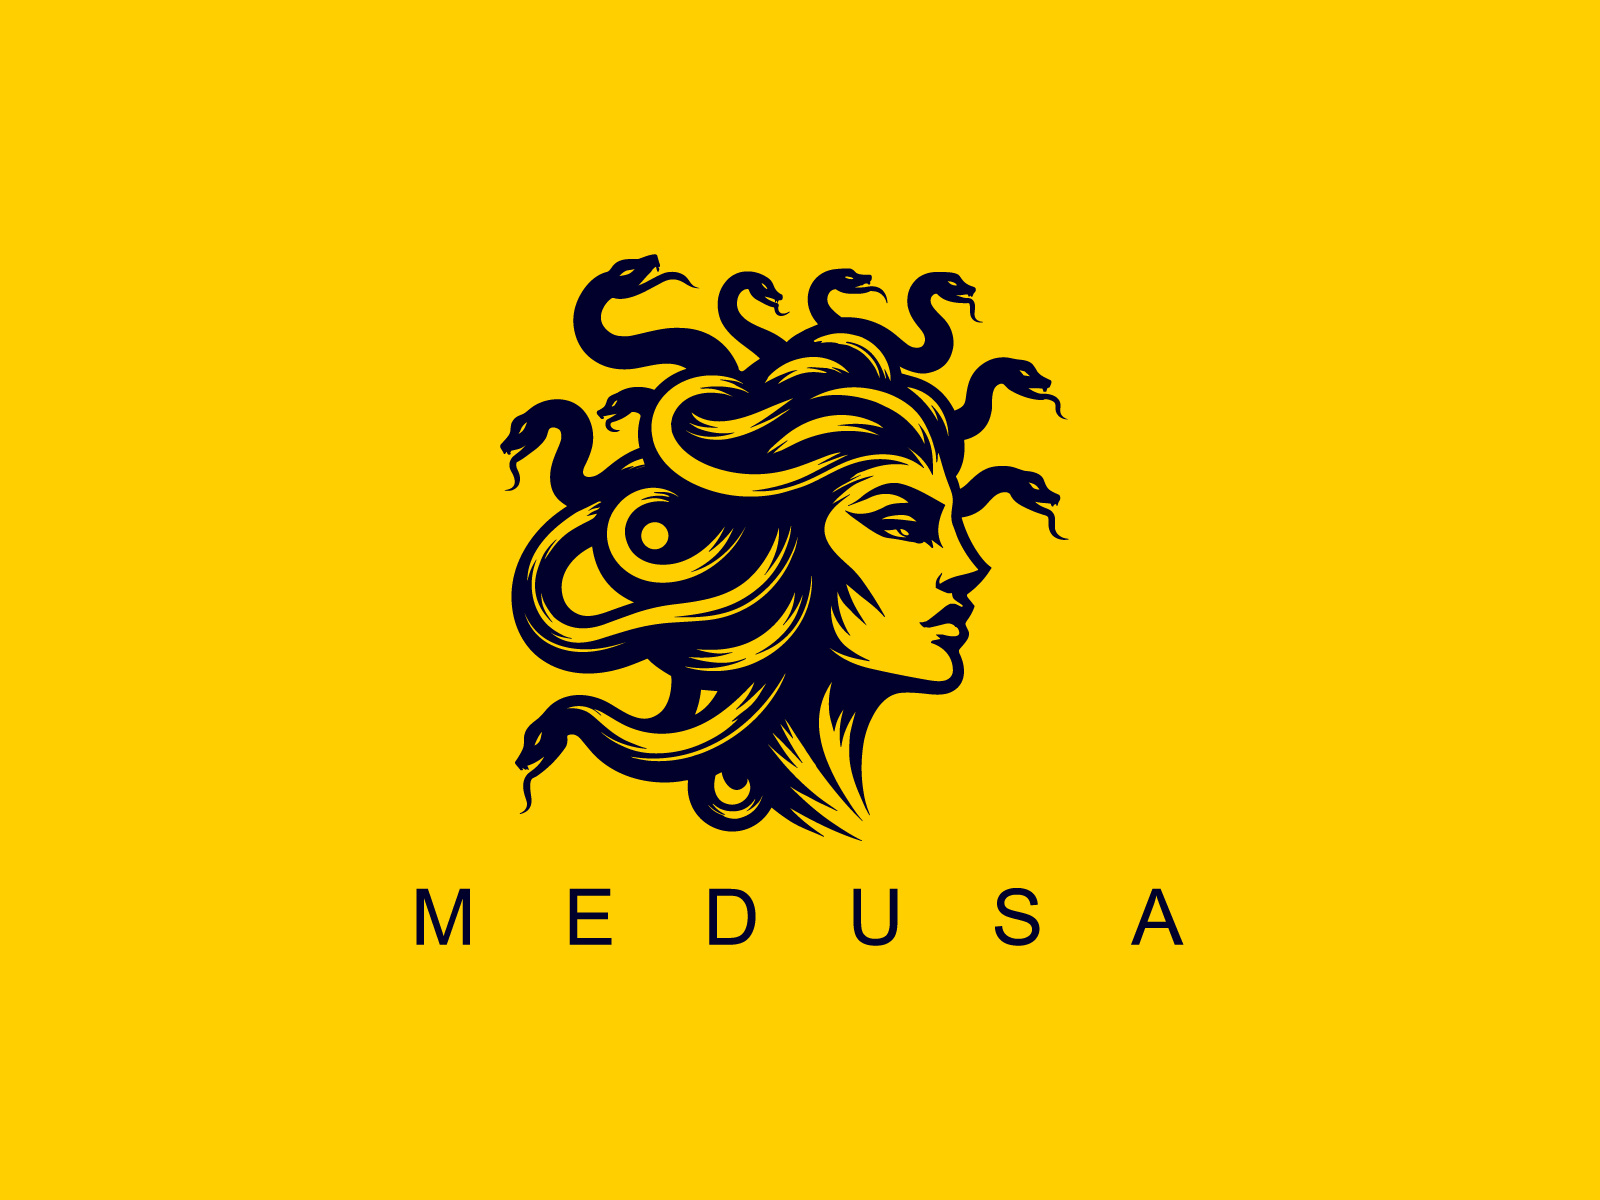 Medusa Logo by Austin Smith on Dribbble